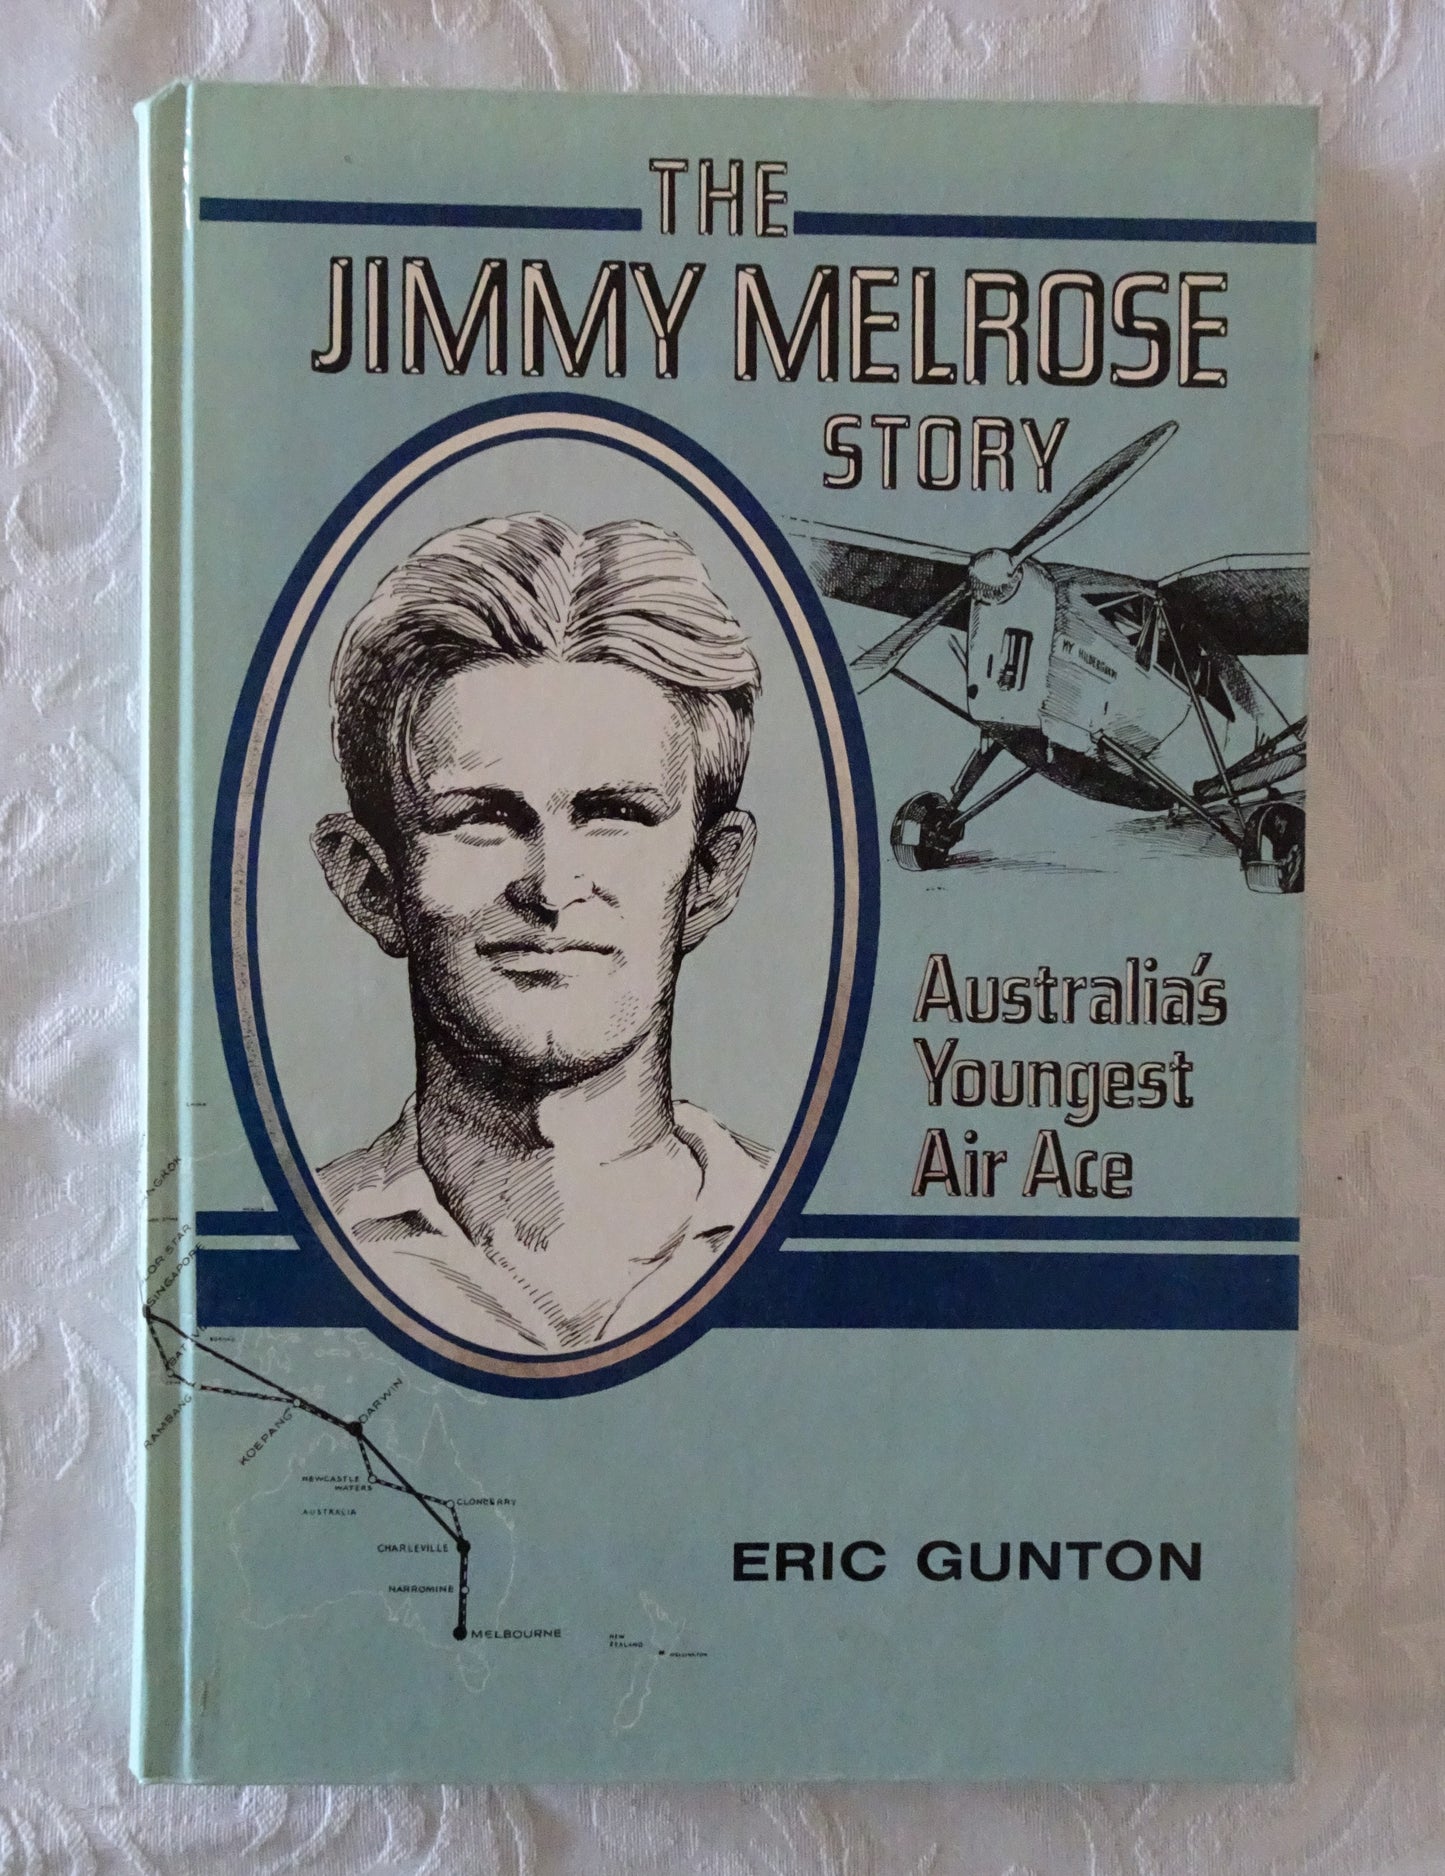 The Jimmy Melrose Story by Eric Gunton